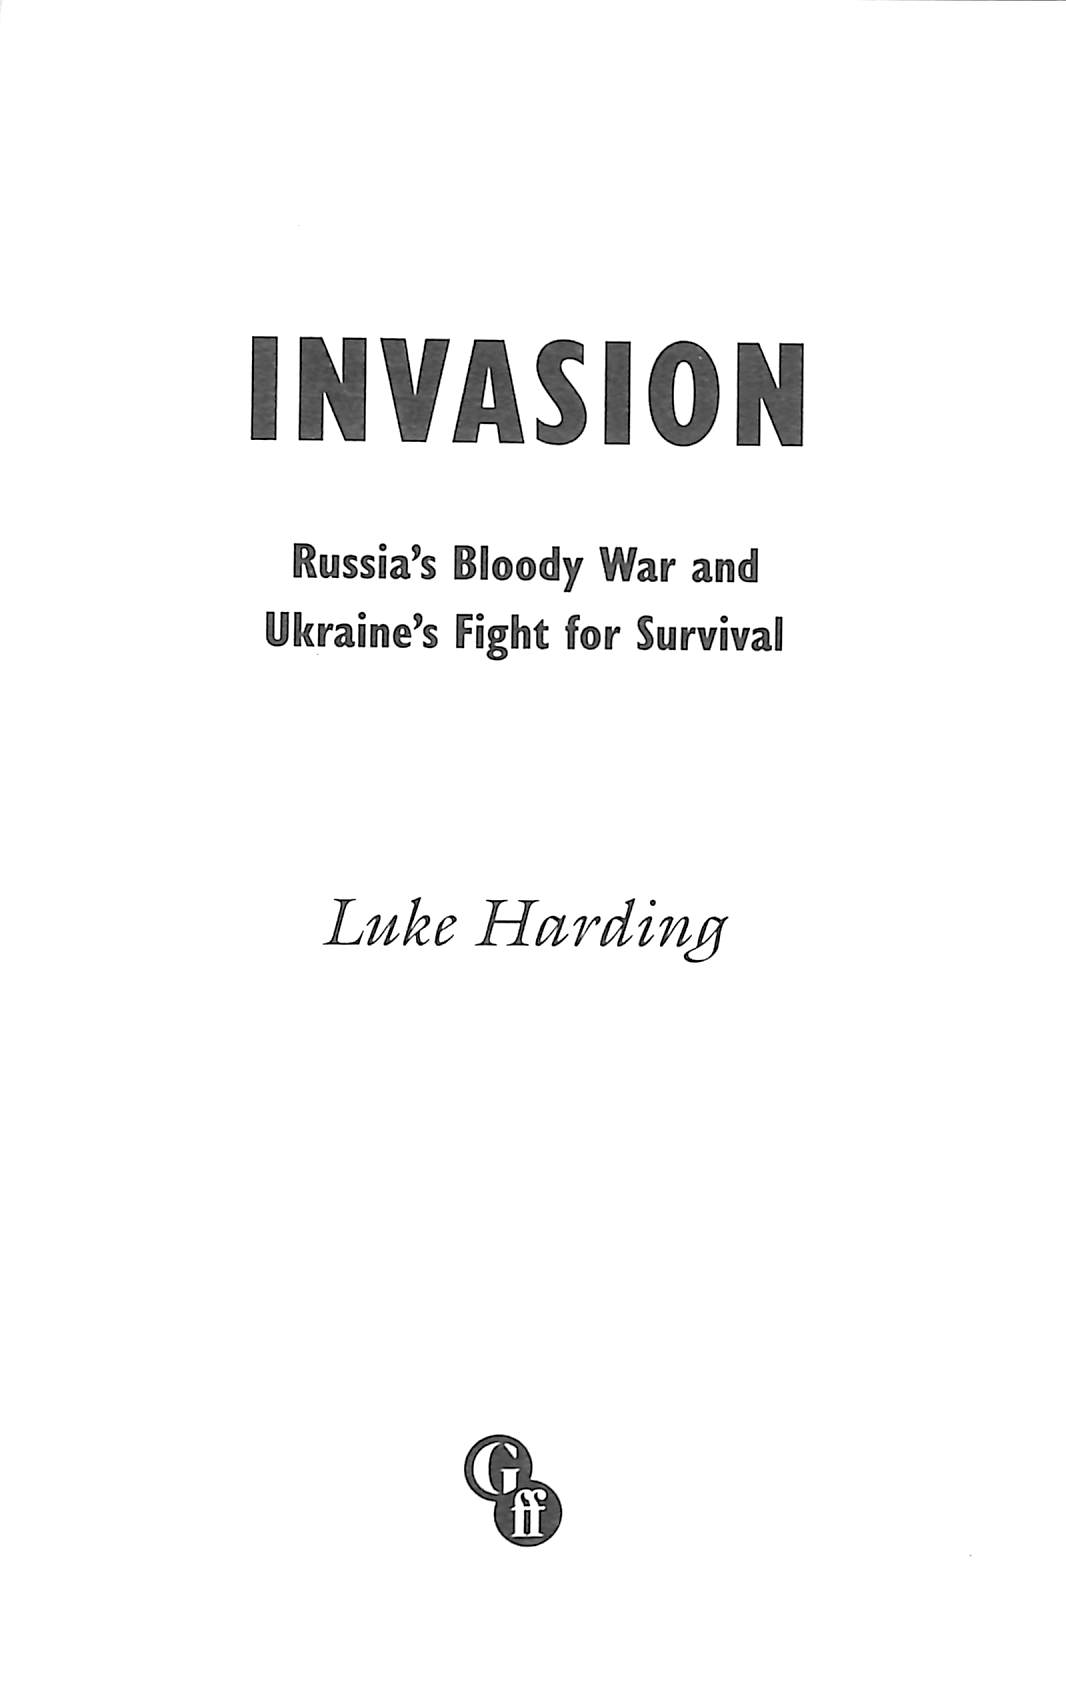 Invasion by Luke Harding